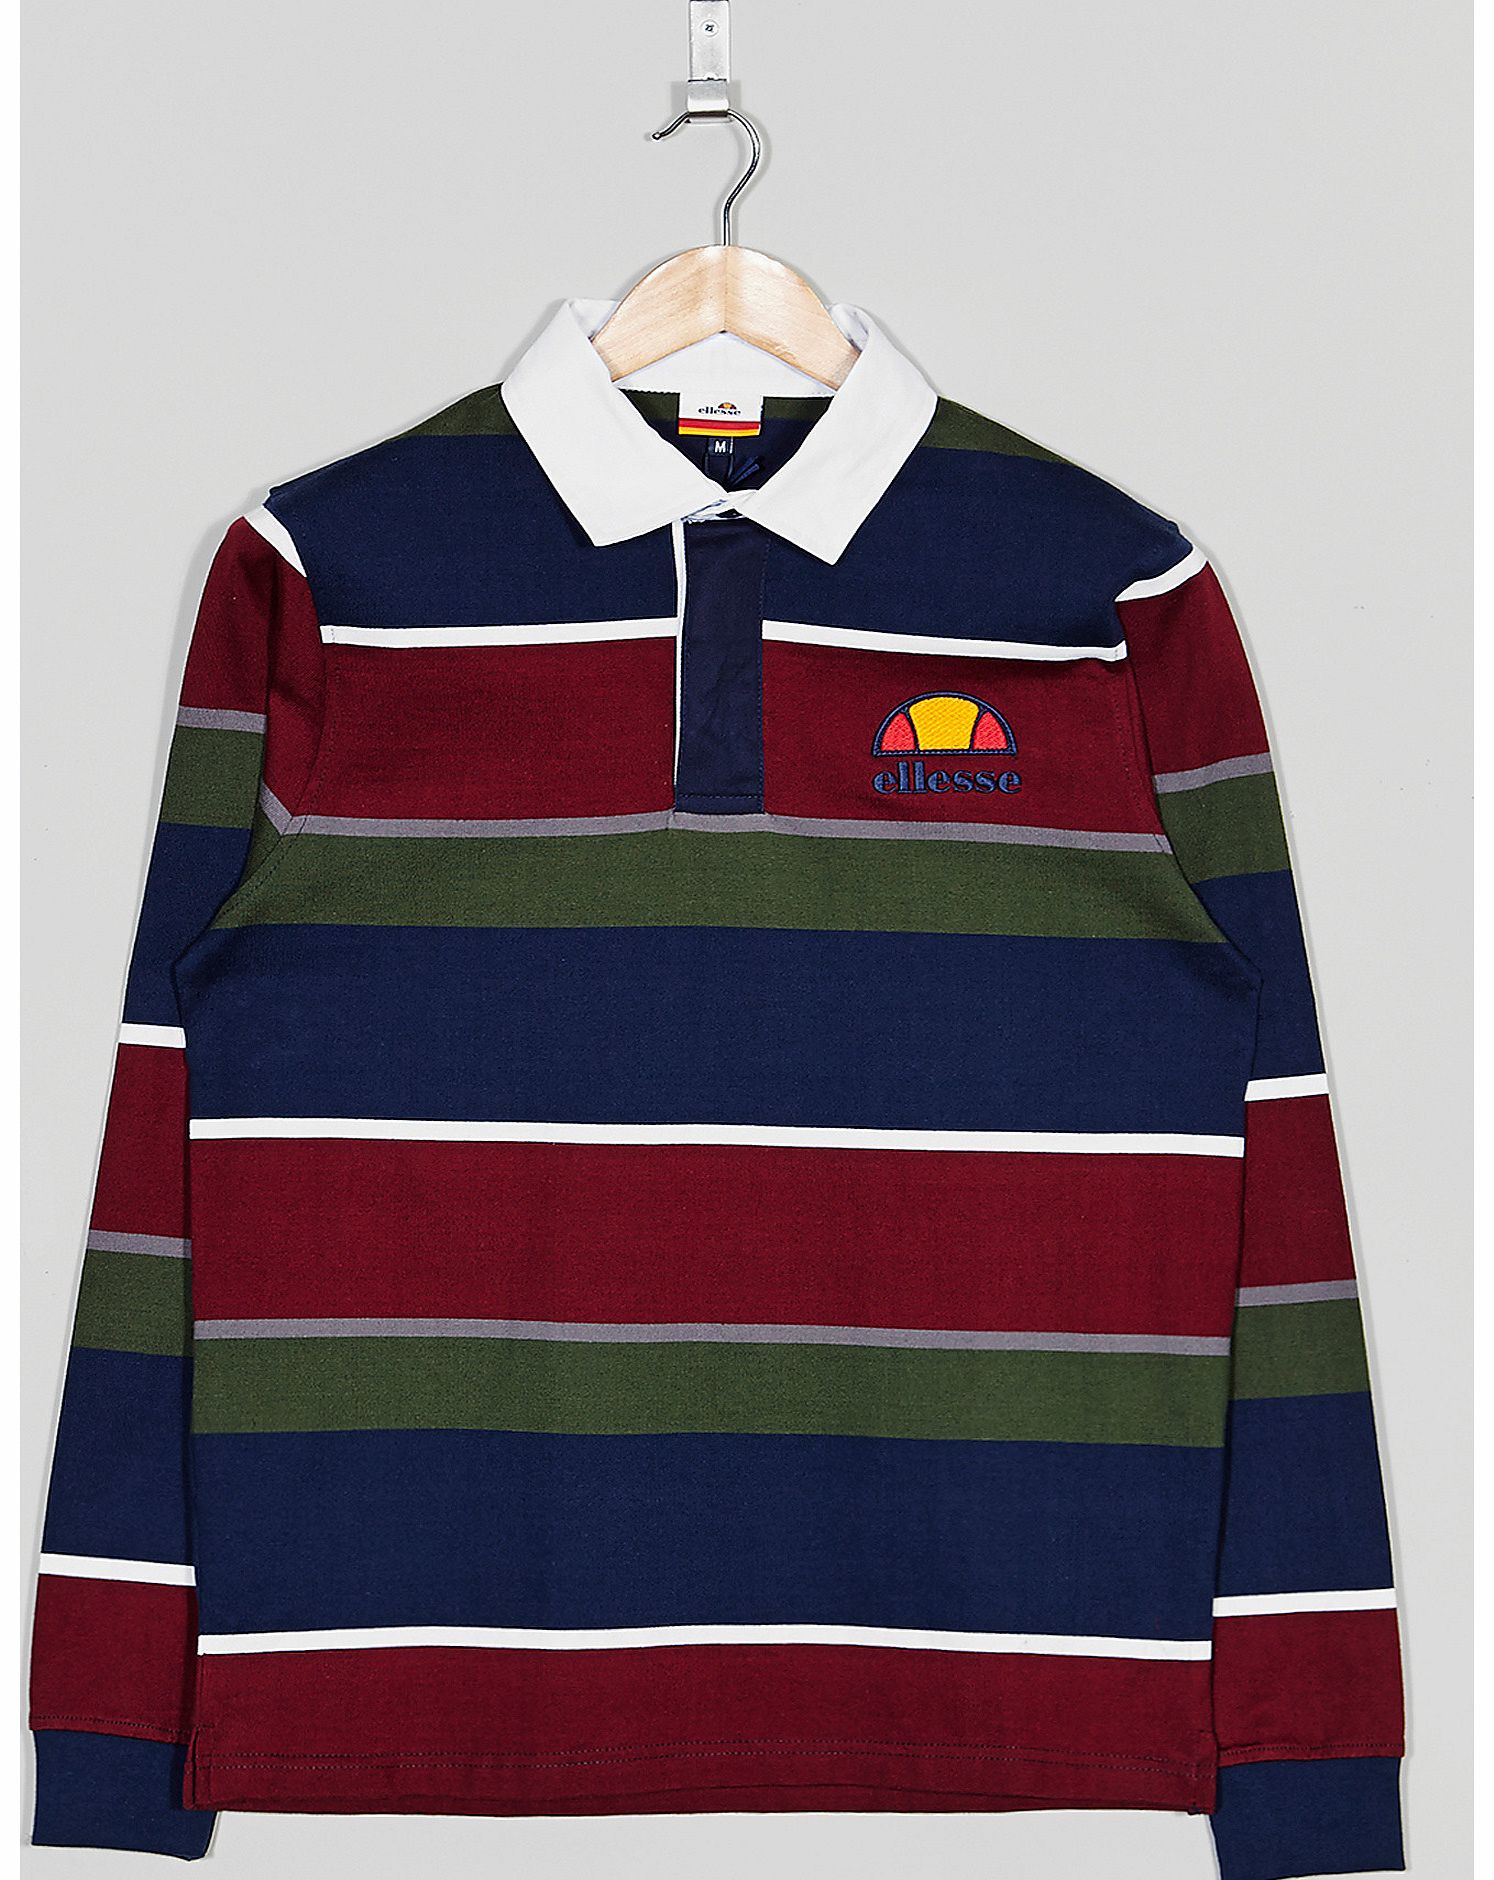 Ellesse Parisse Striped Rugby Shirt - size?